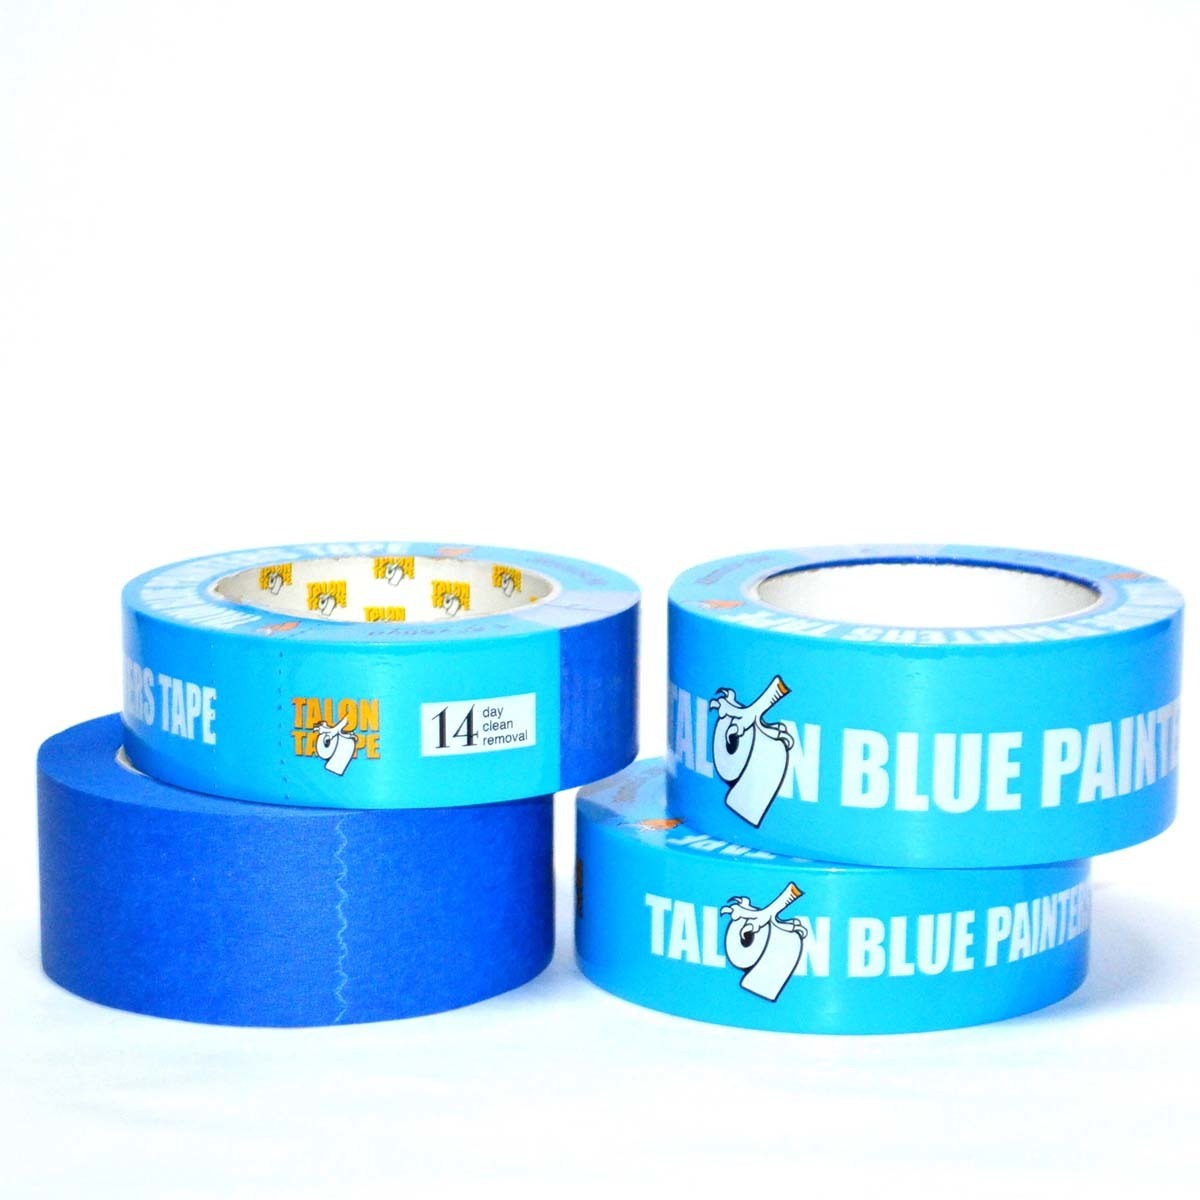 Blue Painters Tape